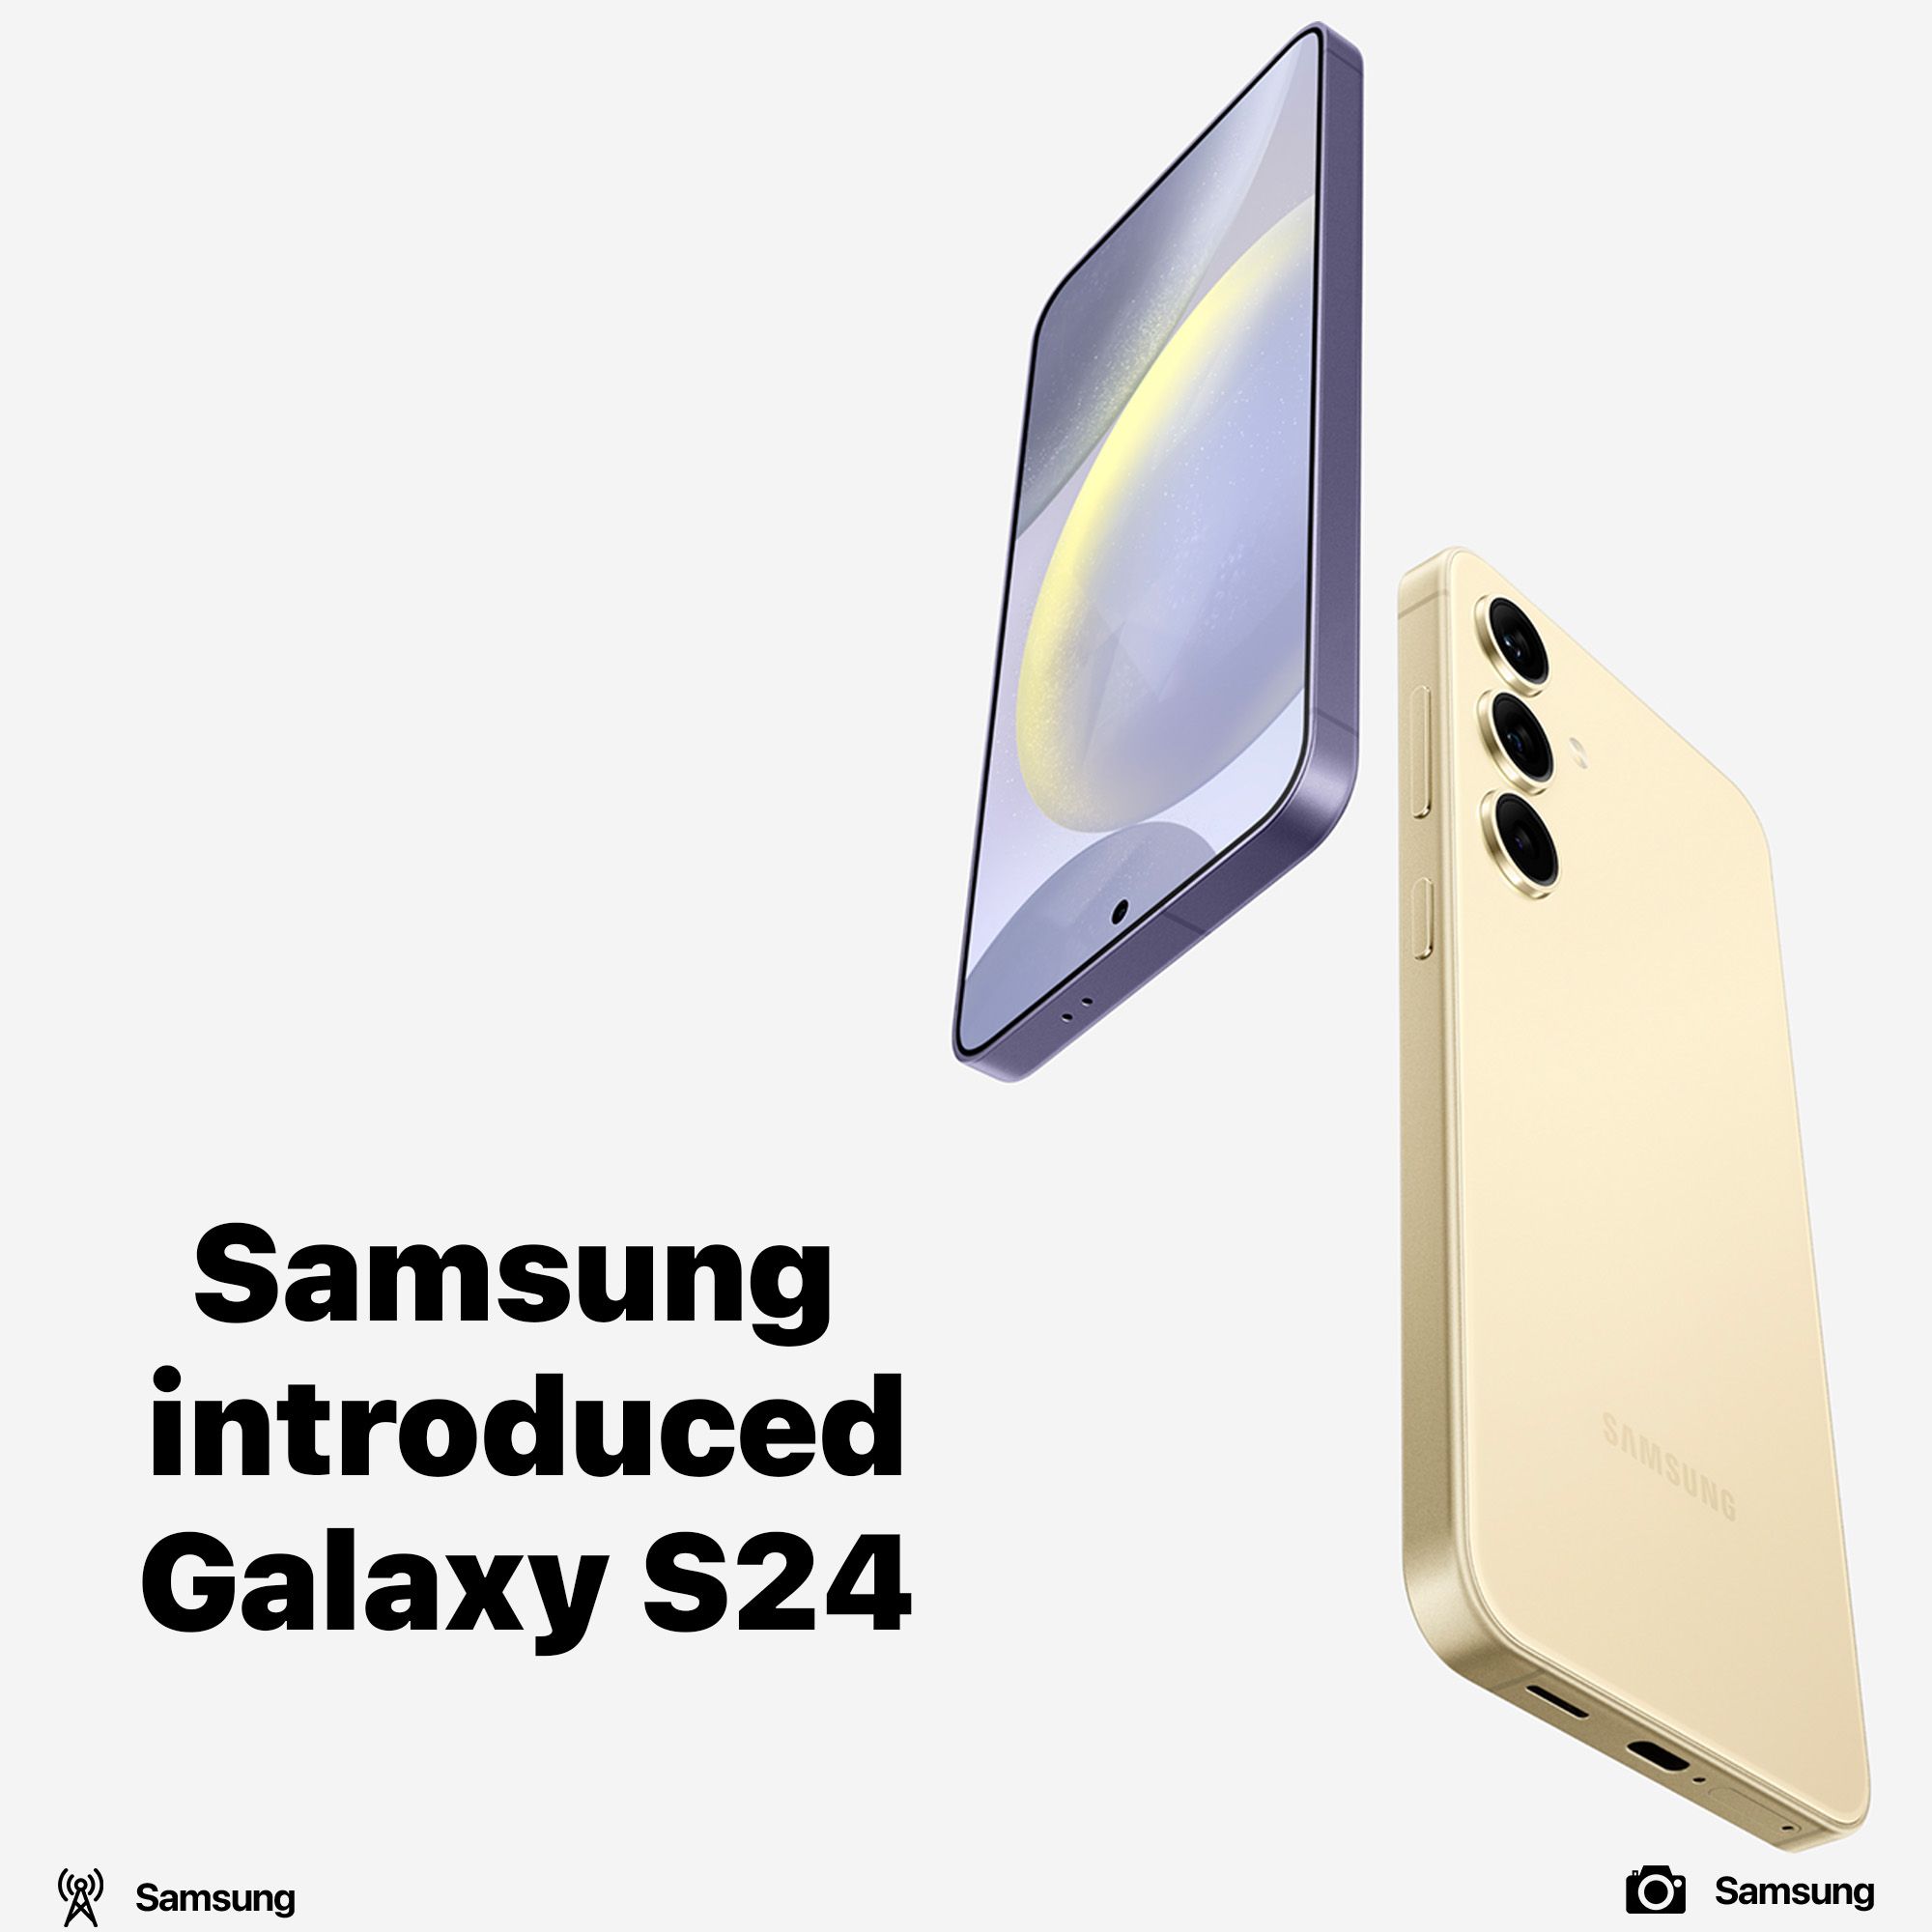 Samsung introduced Galaxy S24